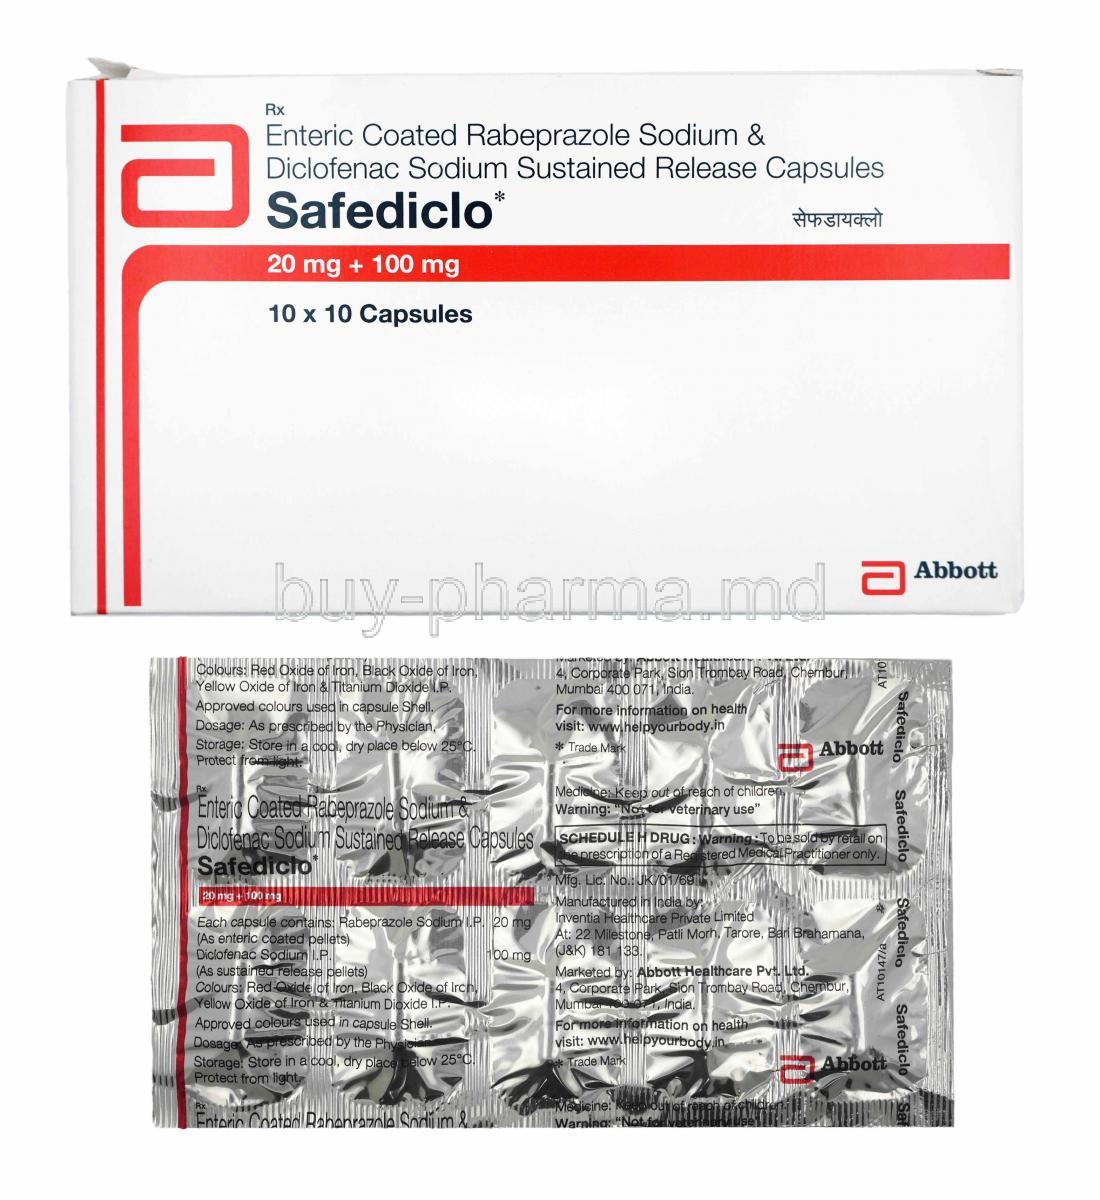 Safediclo, Diclofenac and Rabeprazole box and capsules